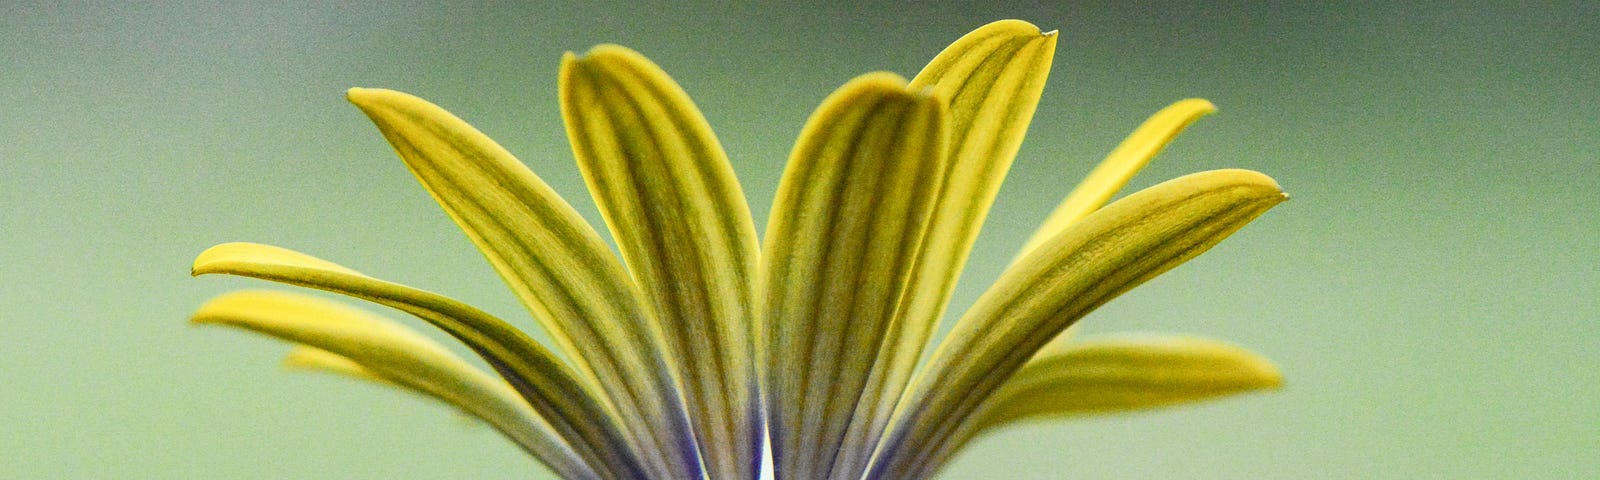 side view of a daisy like flower unfolding it’s petals